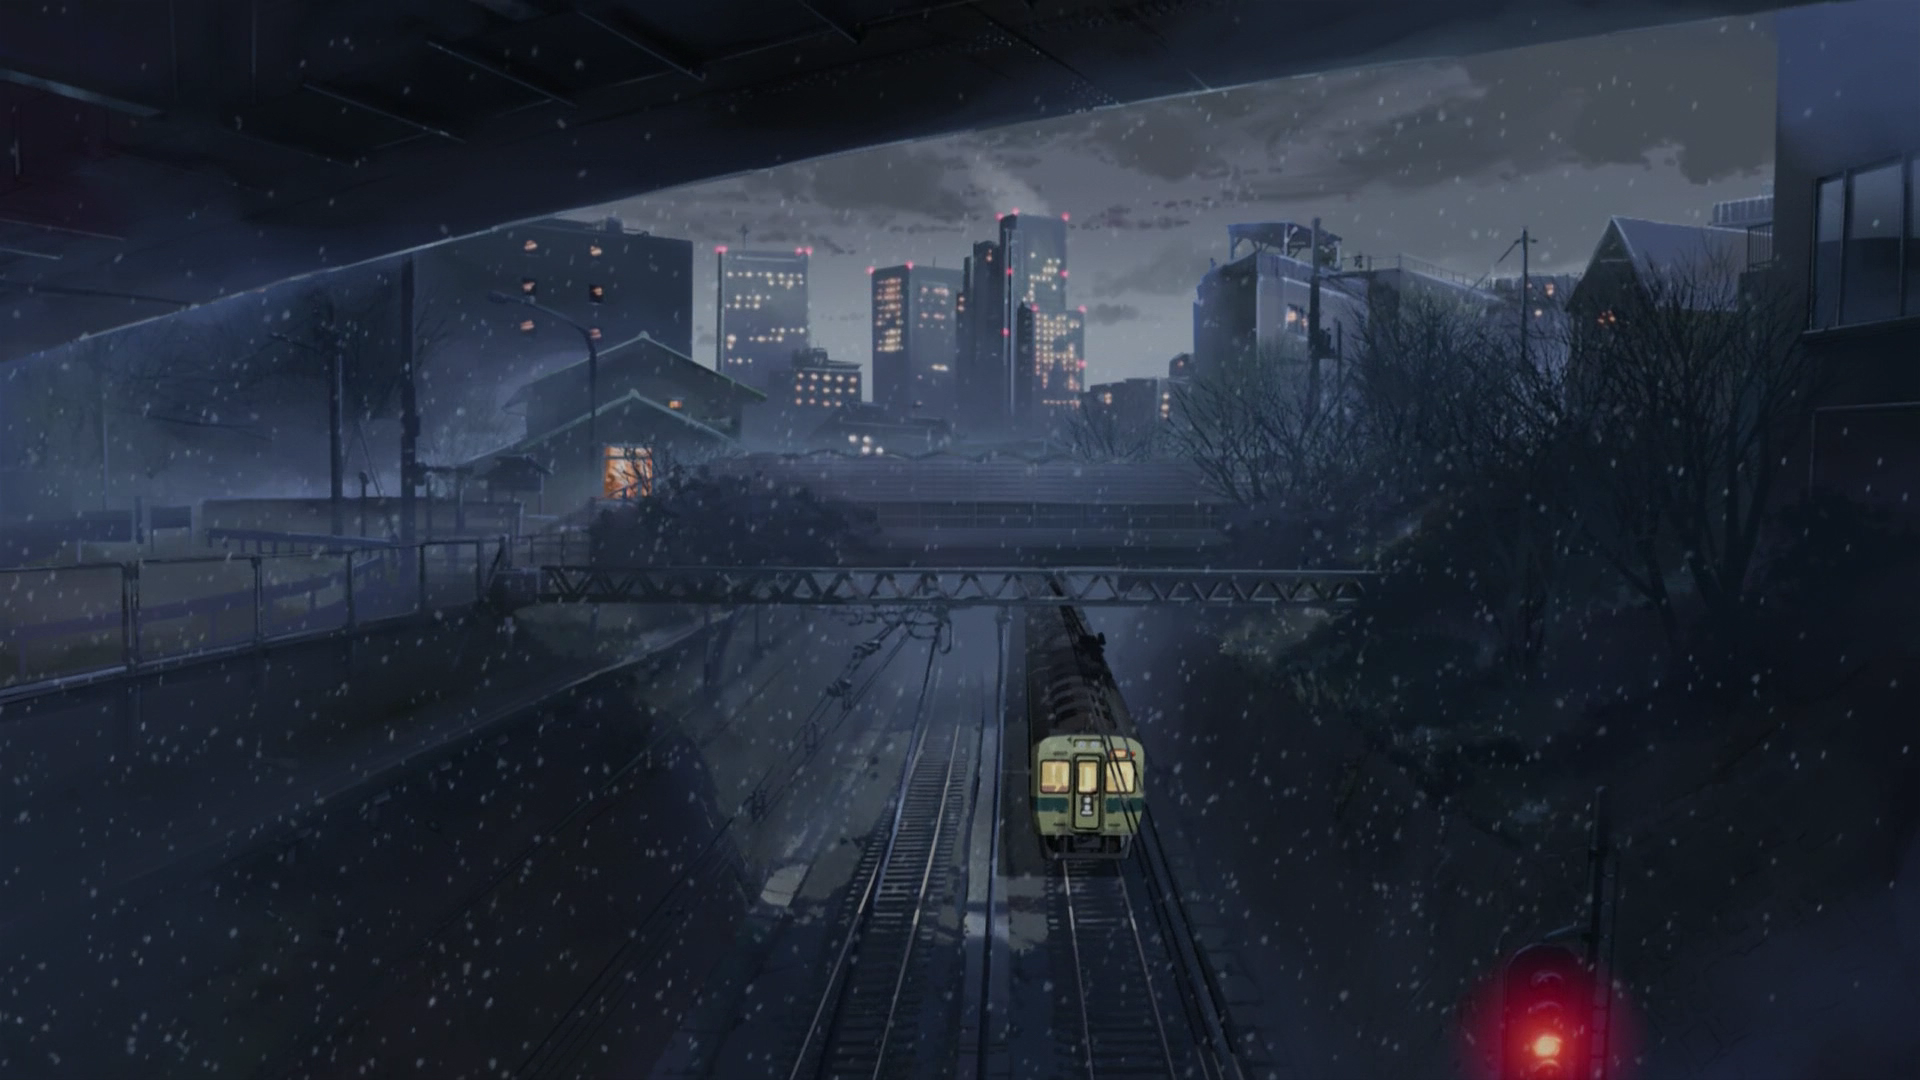 night anime wallpaper,sky,pc game,action adventure game,games,screenshot